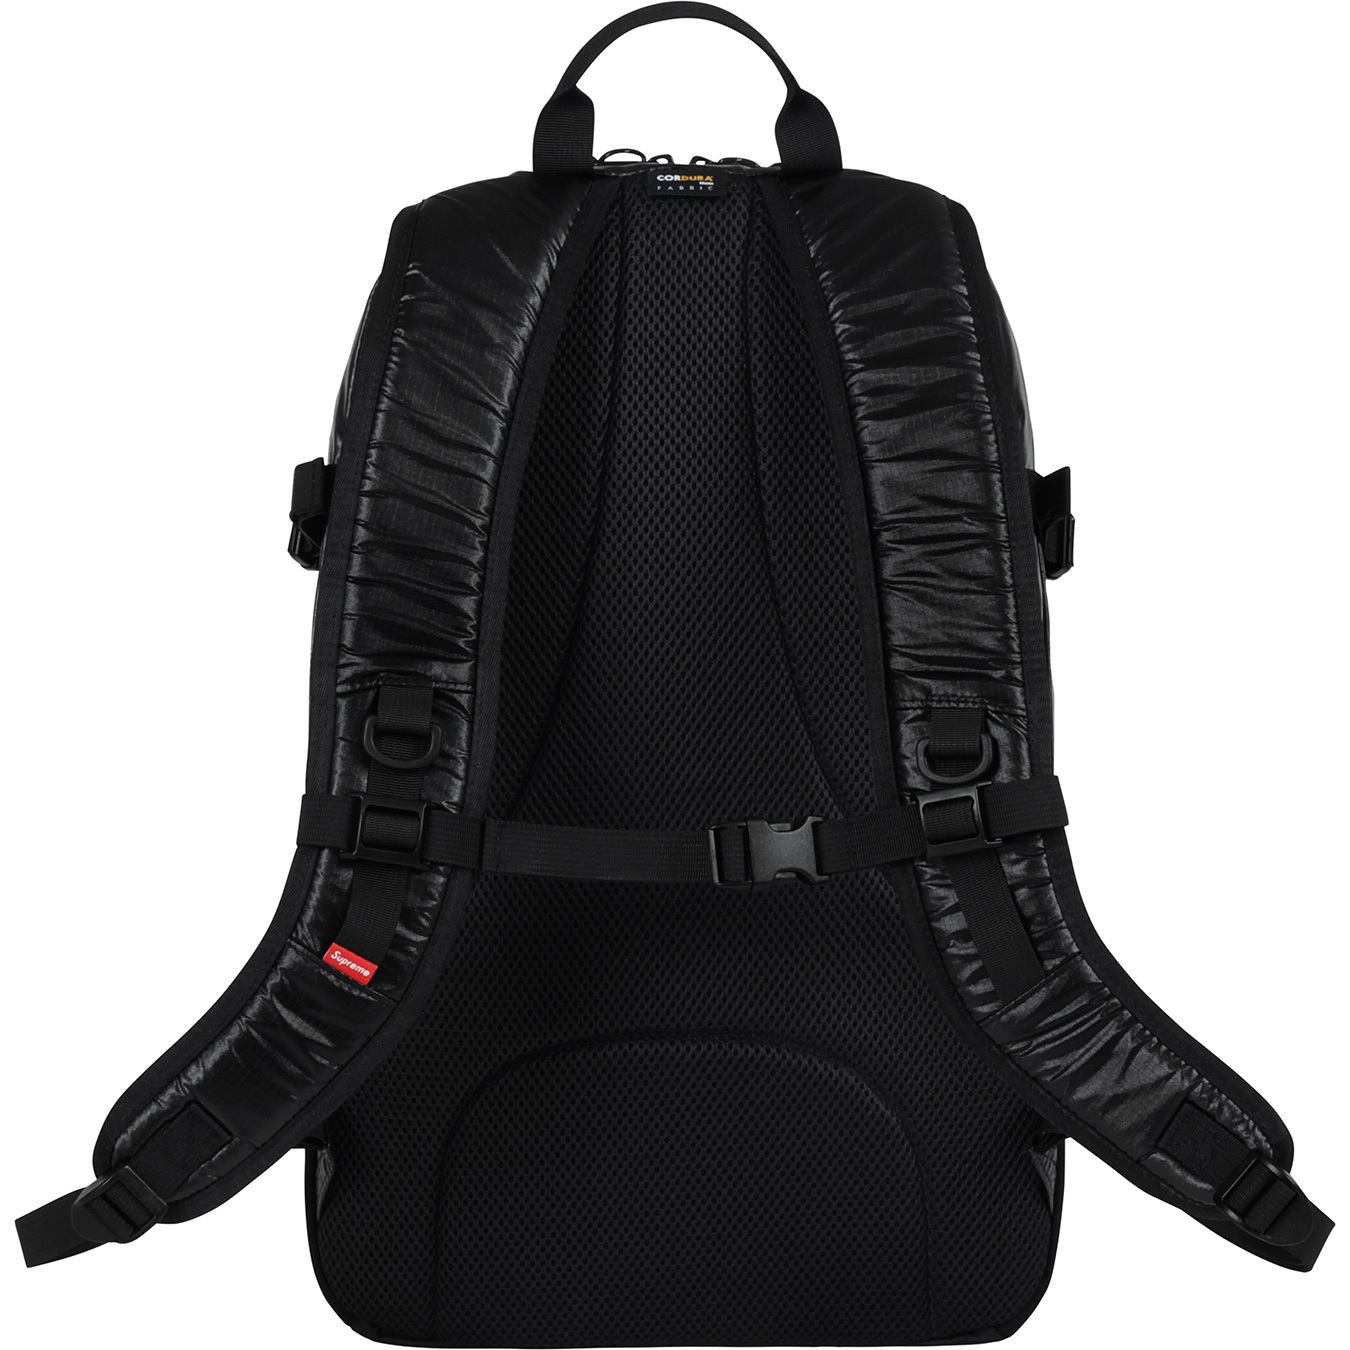 Supreme FW17 Backpack Black - FW17 - US